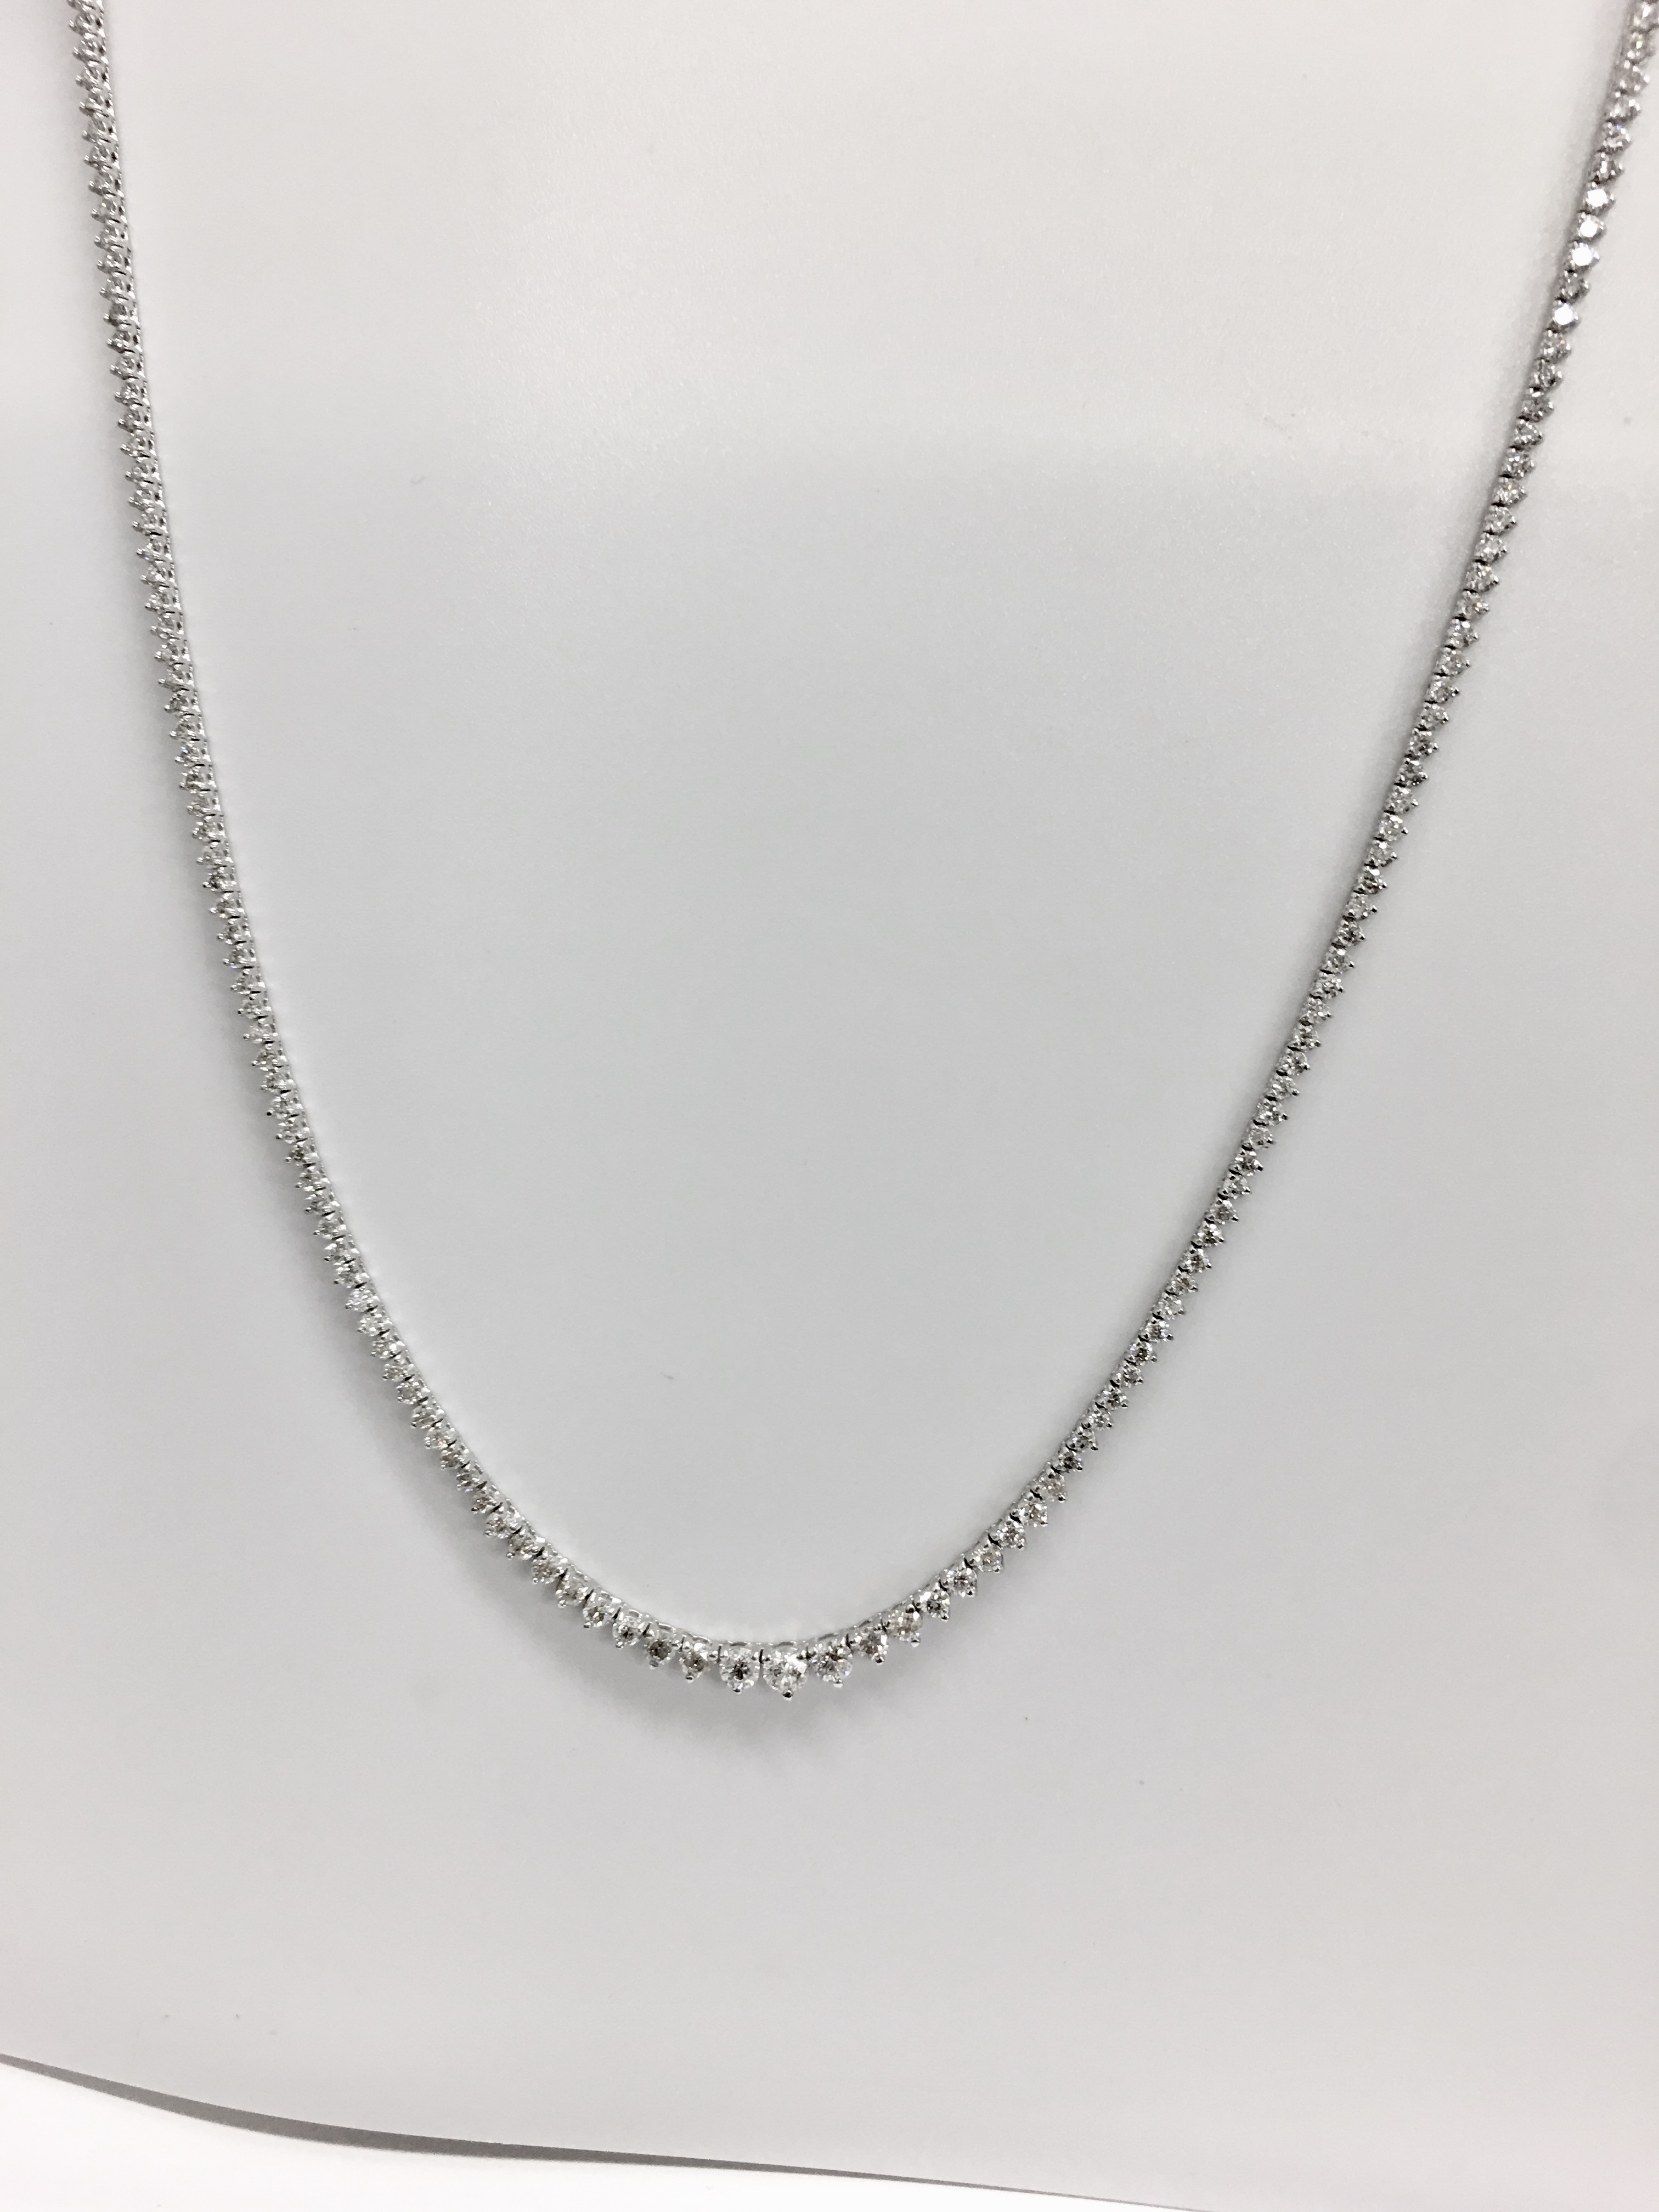 6.75ct diamond necklace ,168 diamonds h colour si grade set in 18ct white gold ,13.4gms ,17Ó uk - Image 5 of 8